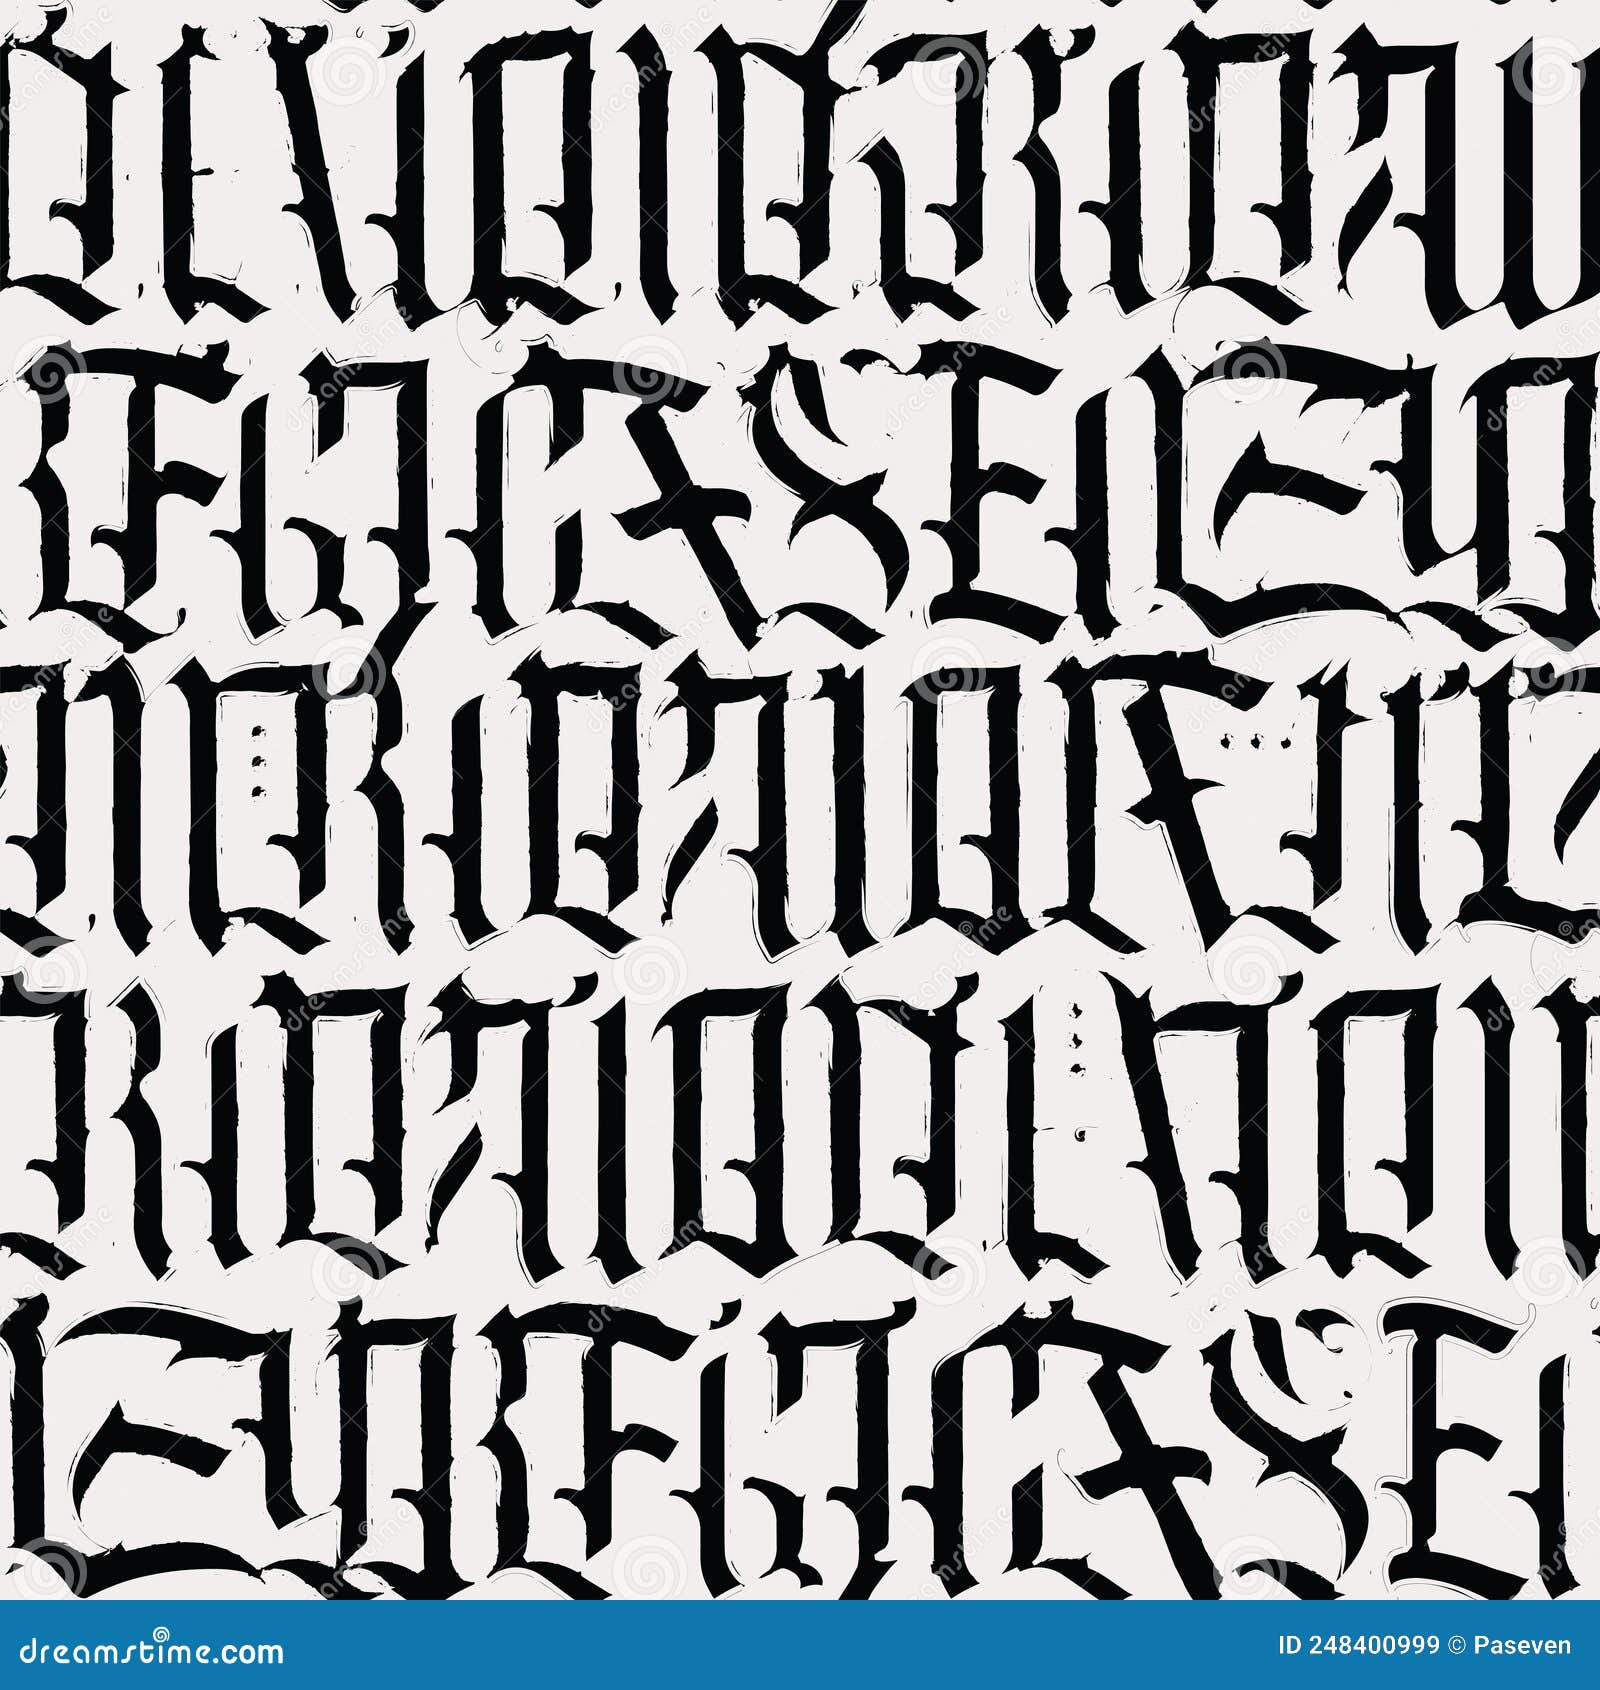 English Alphabet Wallpapers - Wallpaper Cave